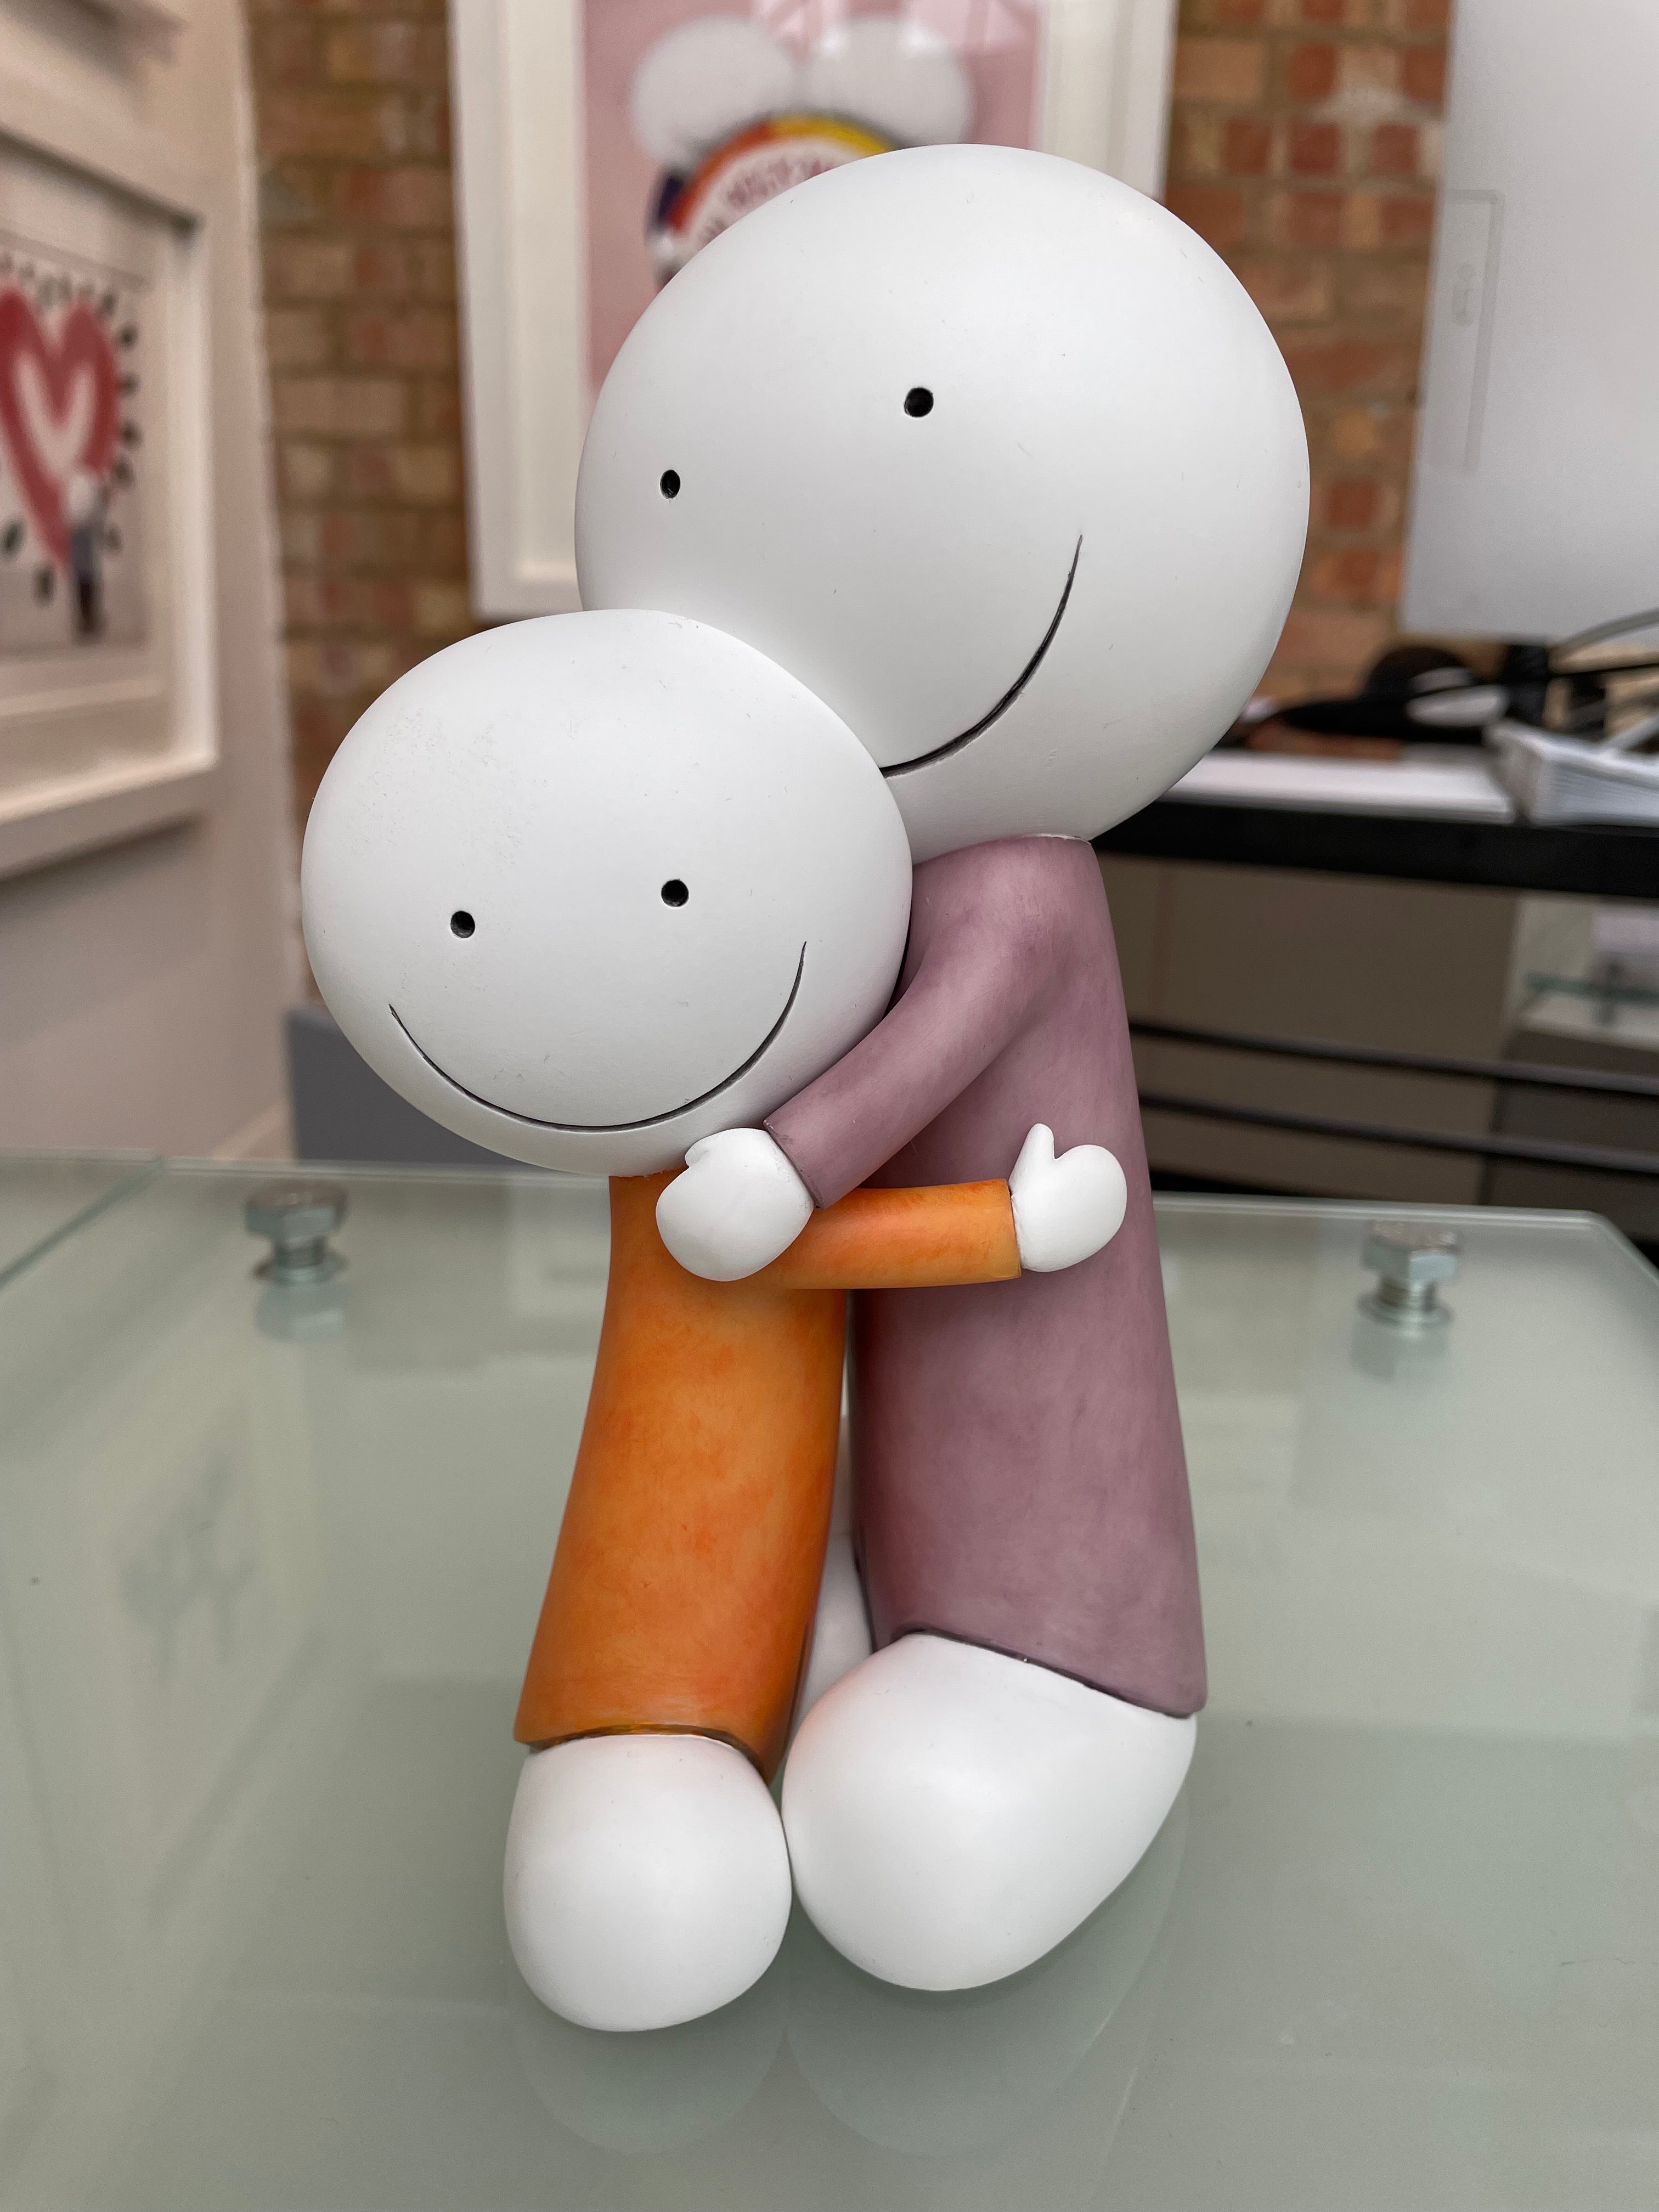 Doug Hyde cold cast porcelain sculpture Big Hugs in the gallery